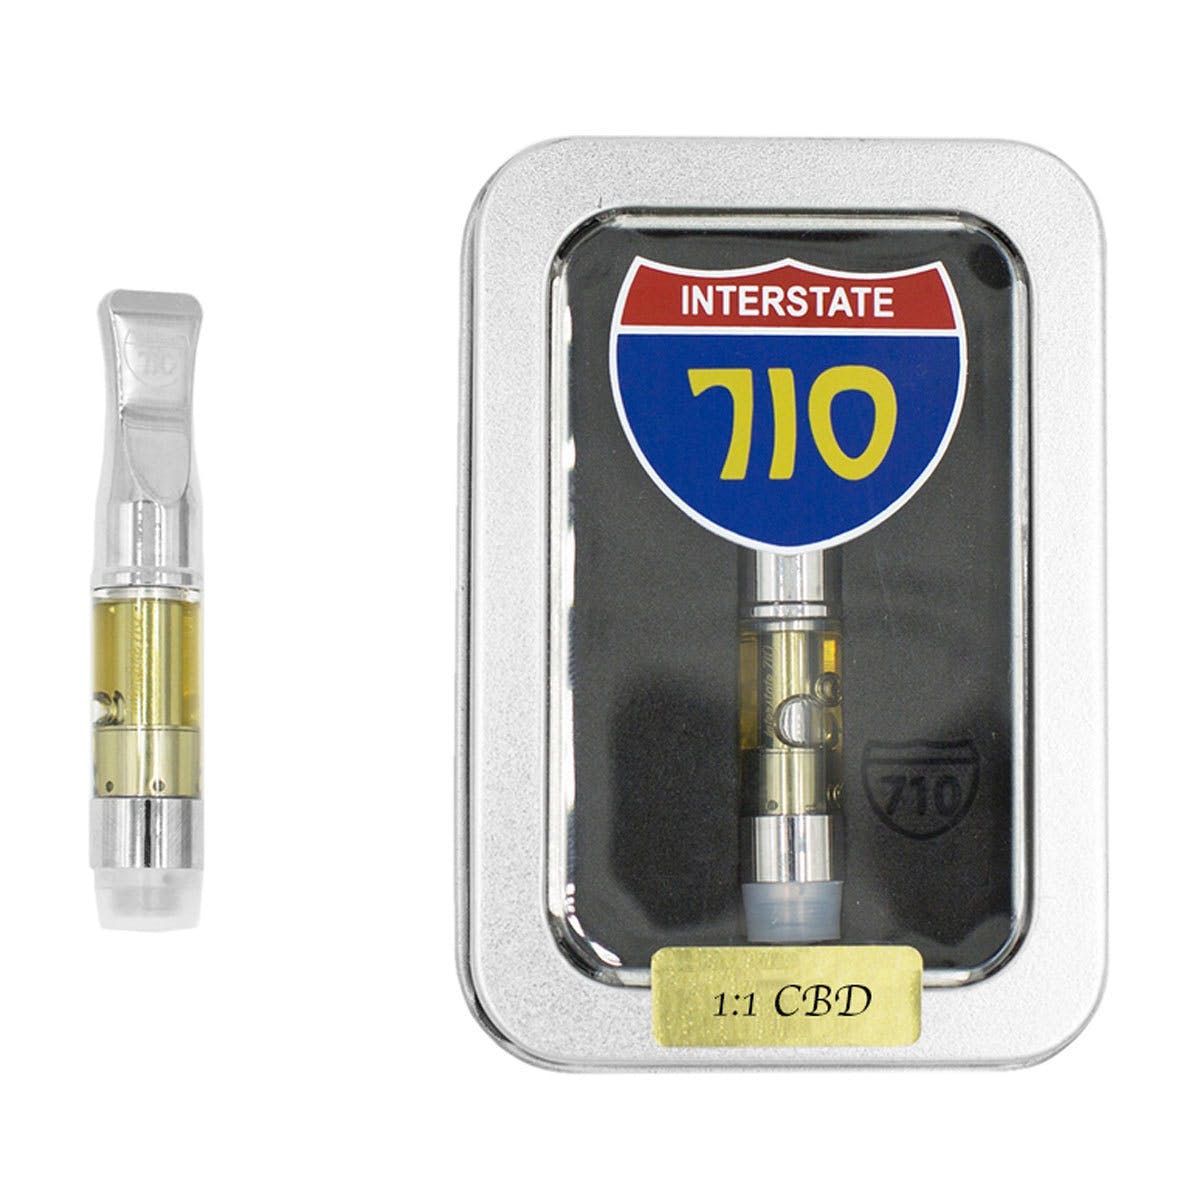 concentrate-interstate-cannabinoids-710-11-cbd-cartridge